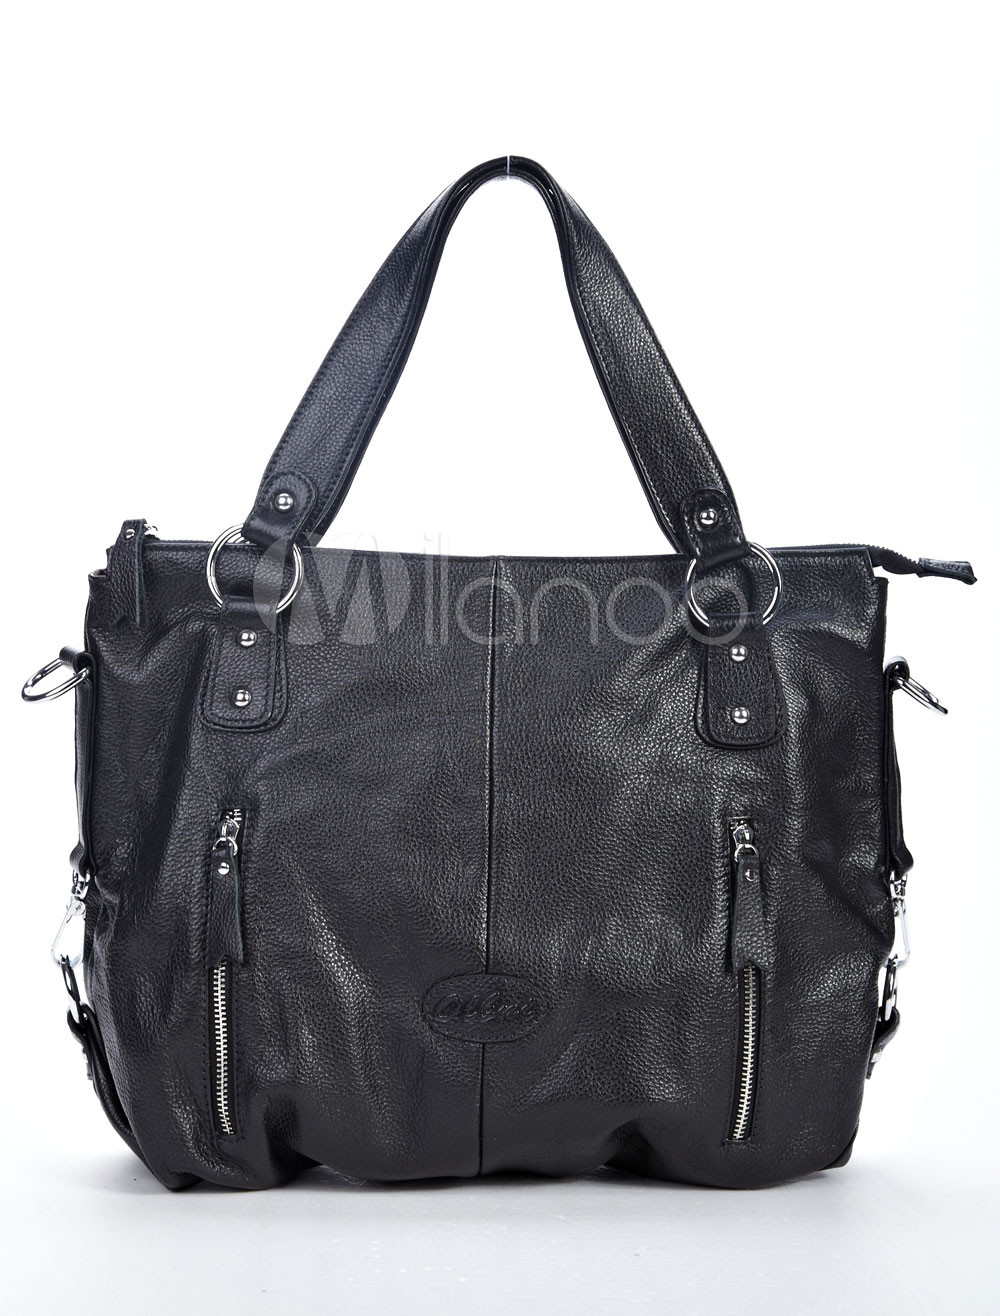 Trendy Black Cowhide Zippers Patent Tote Bag For Ladies - Milanoo.com